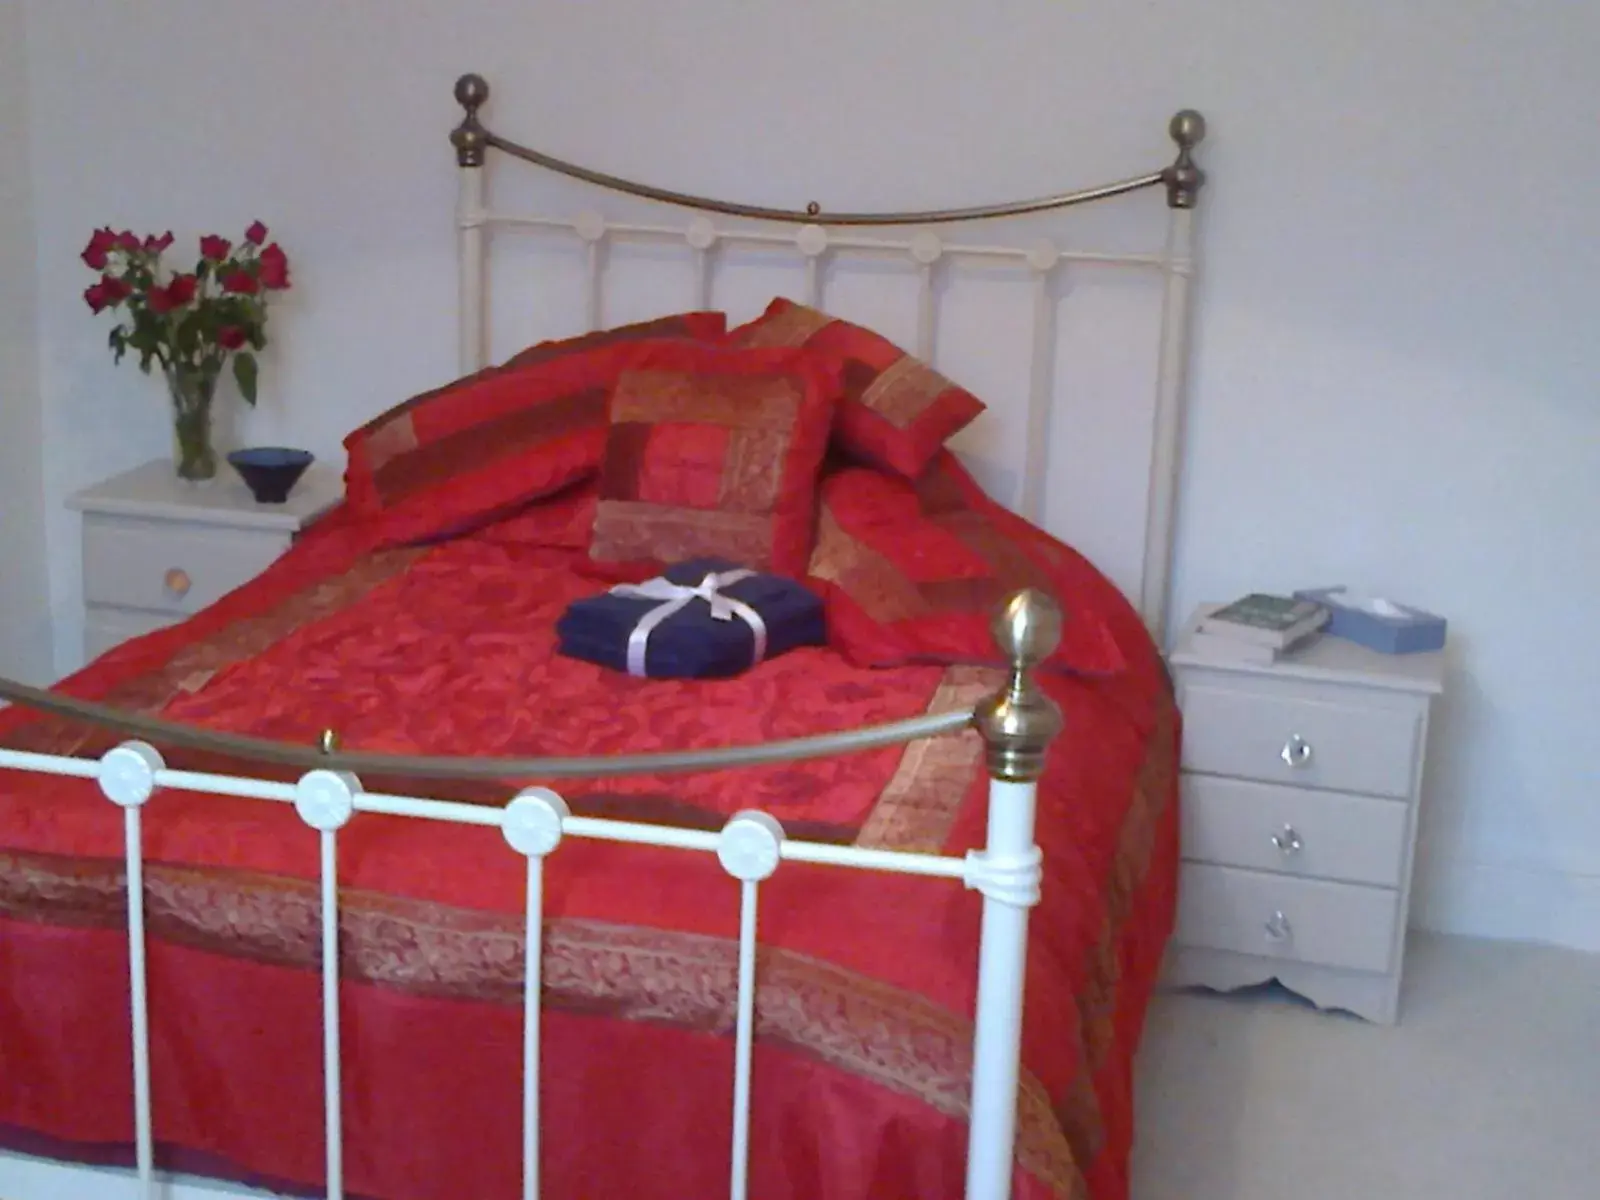 Bed in Town House Bridport Dorset